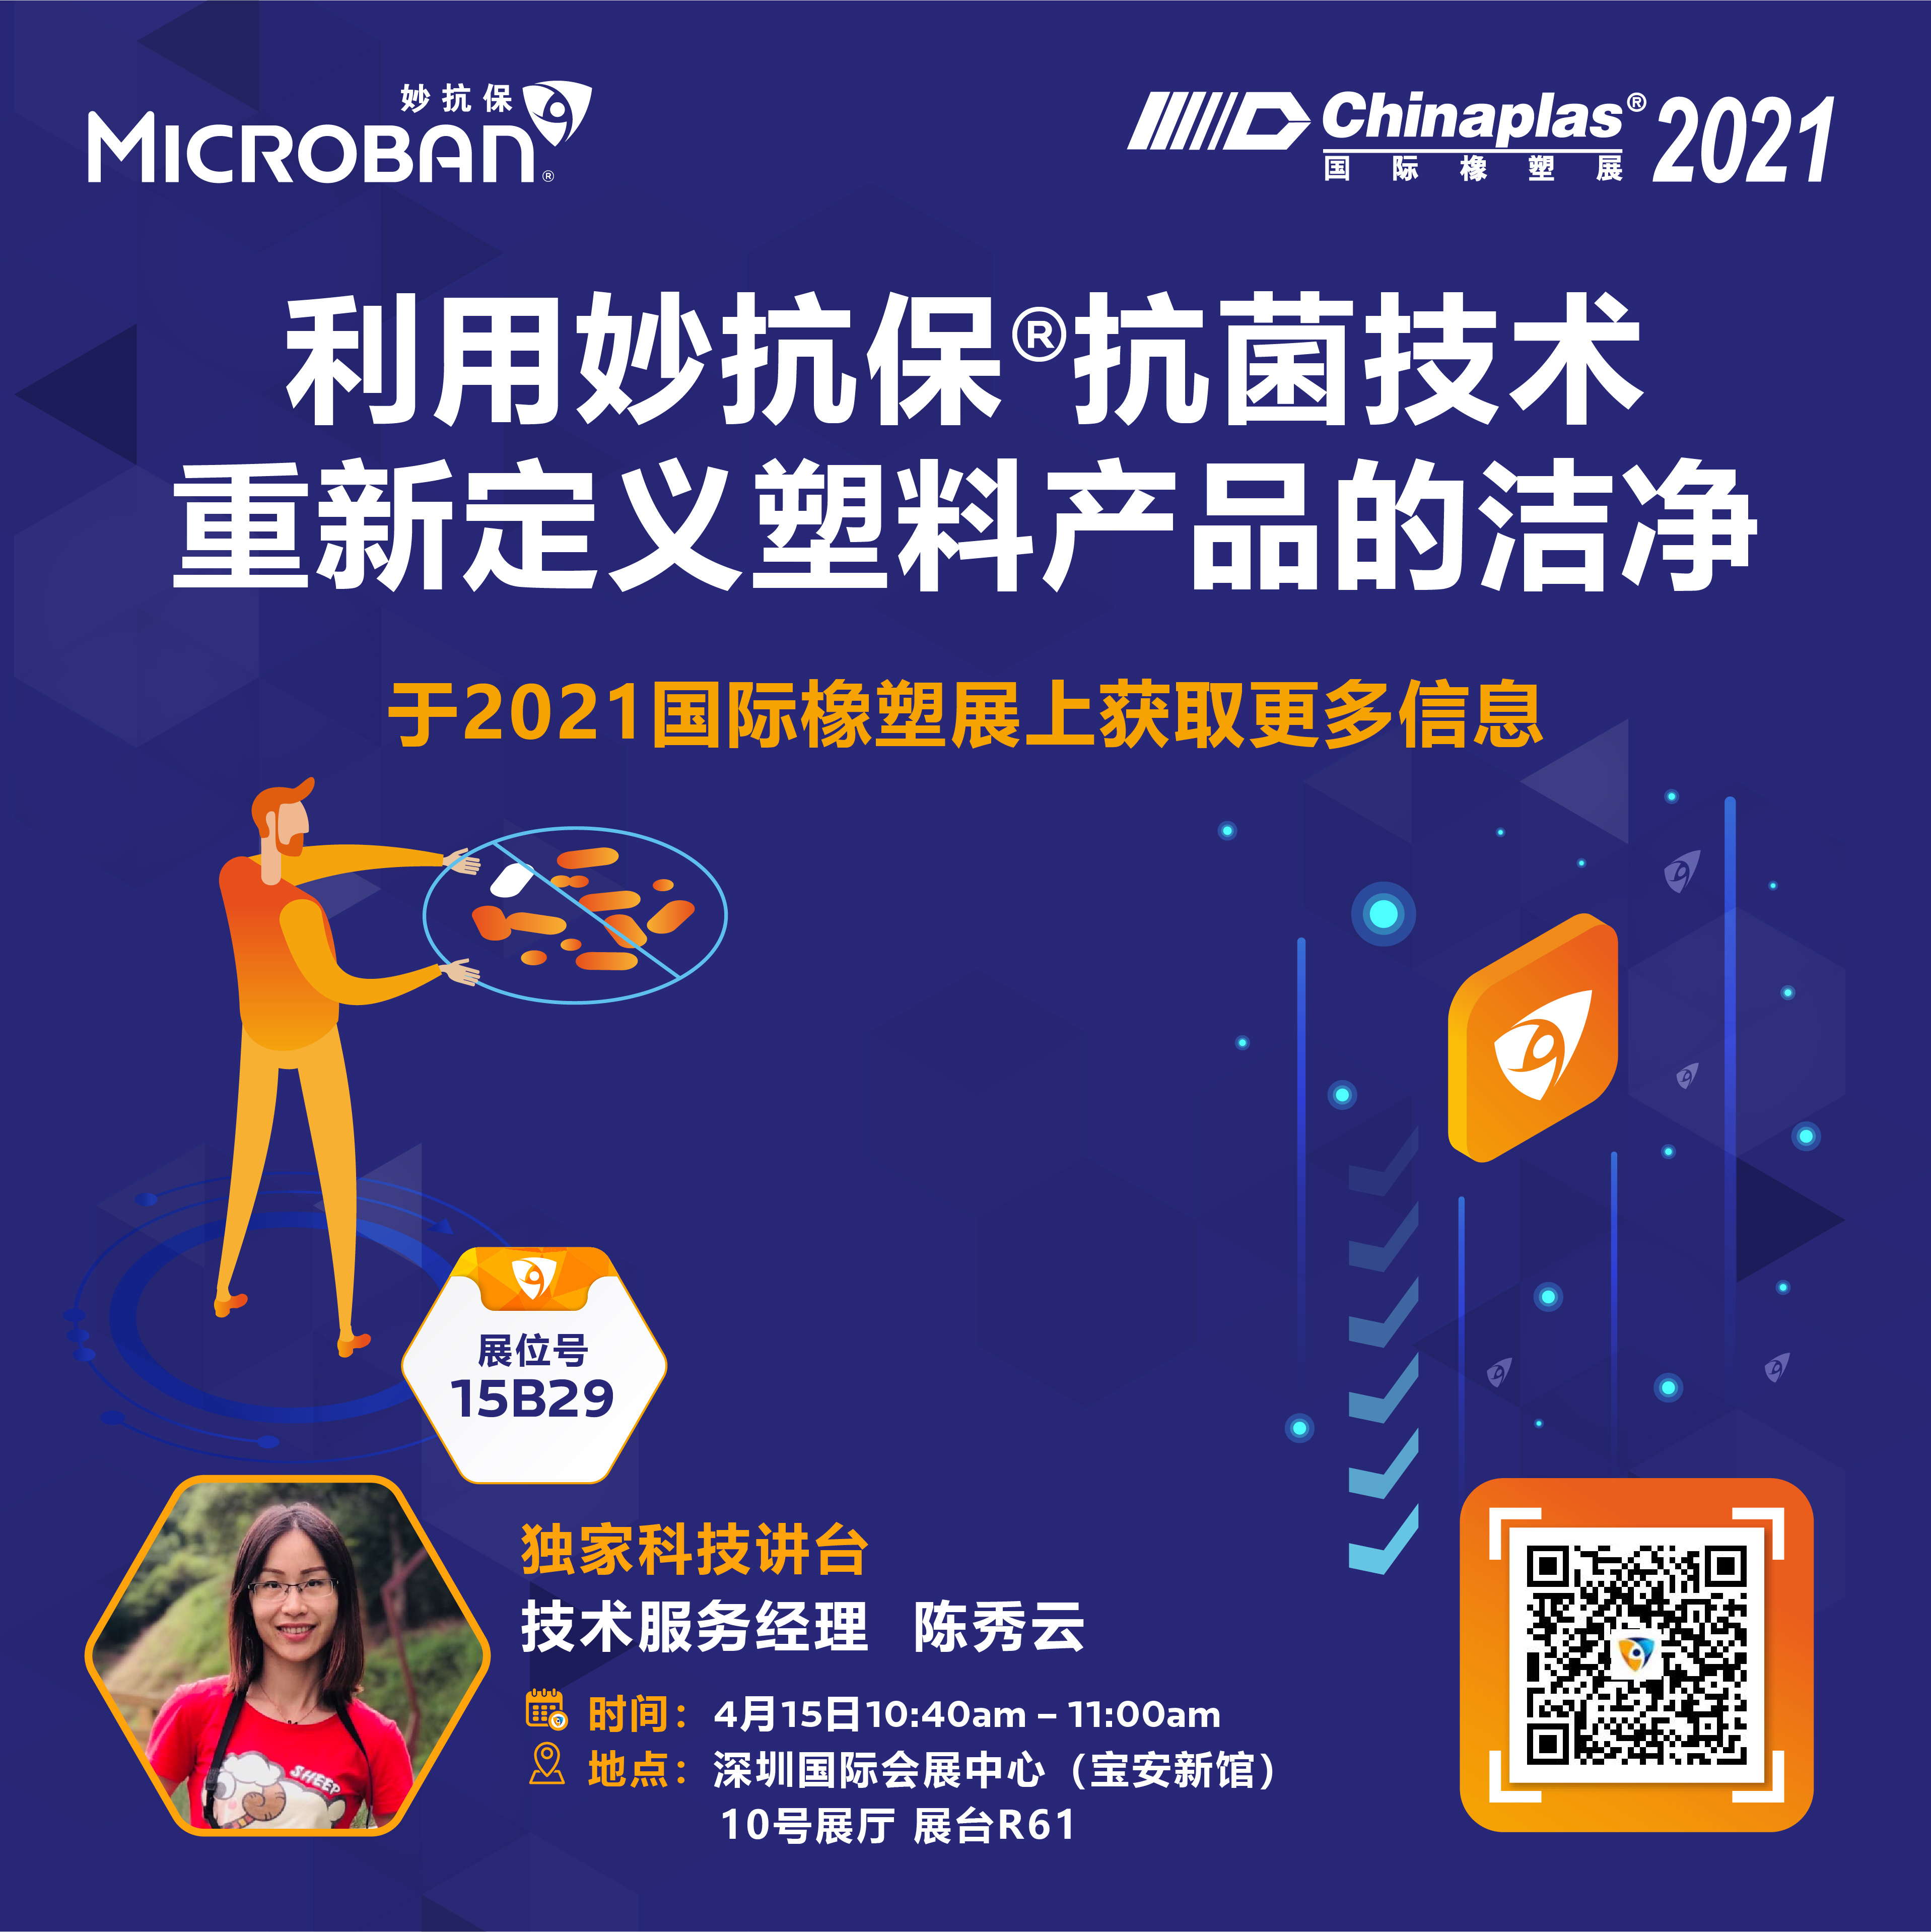 Chinaplas 2021 Social Promo Visuals We Chat Content 02